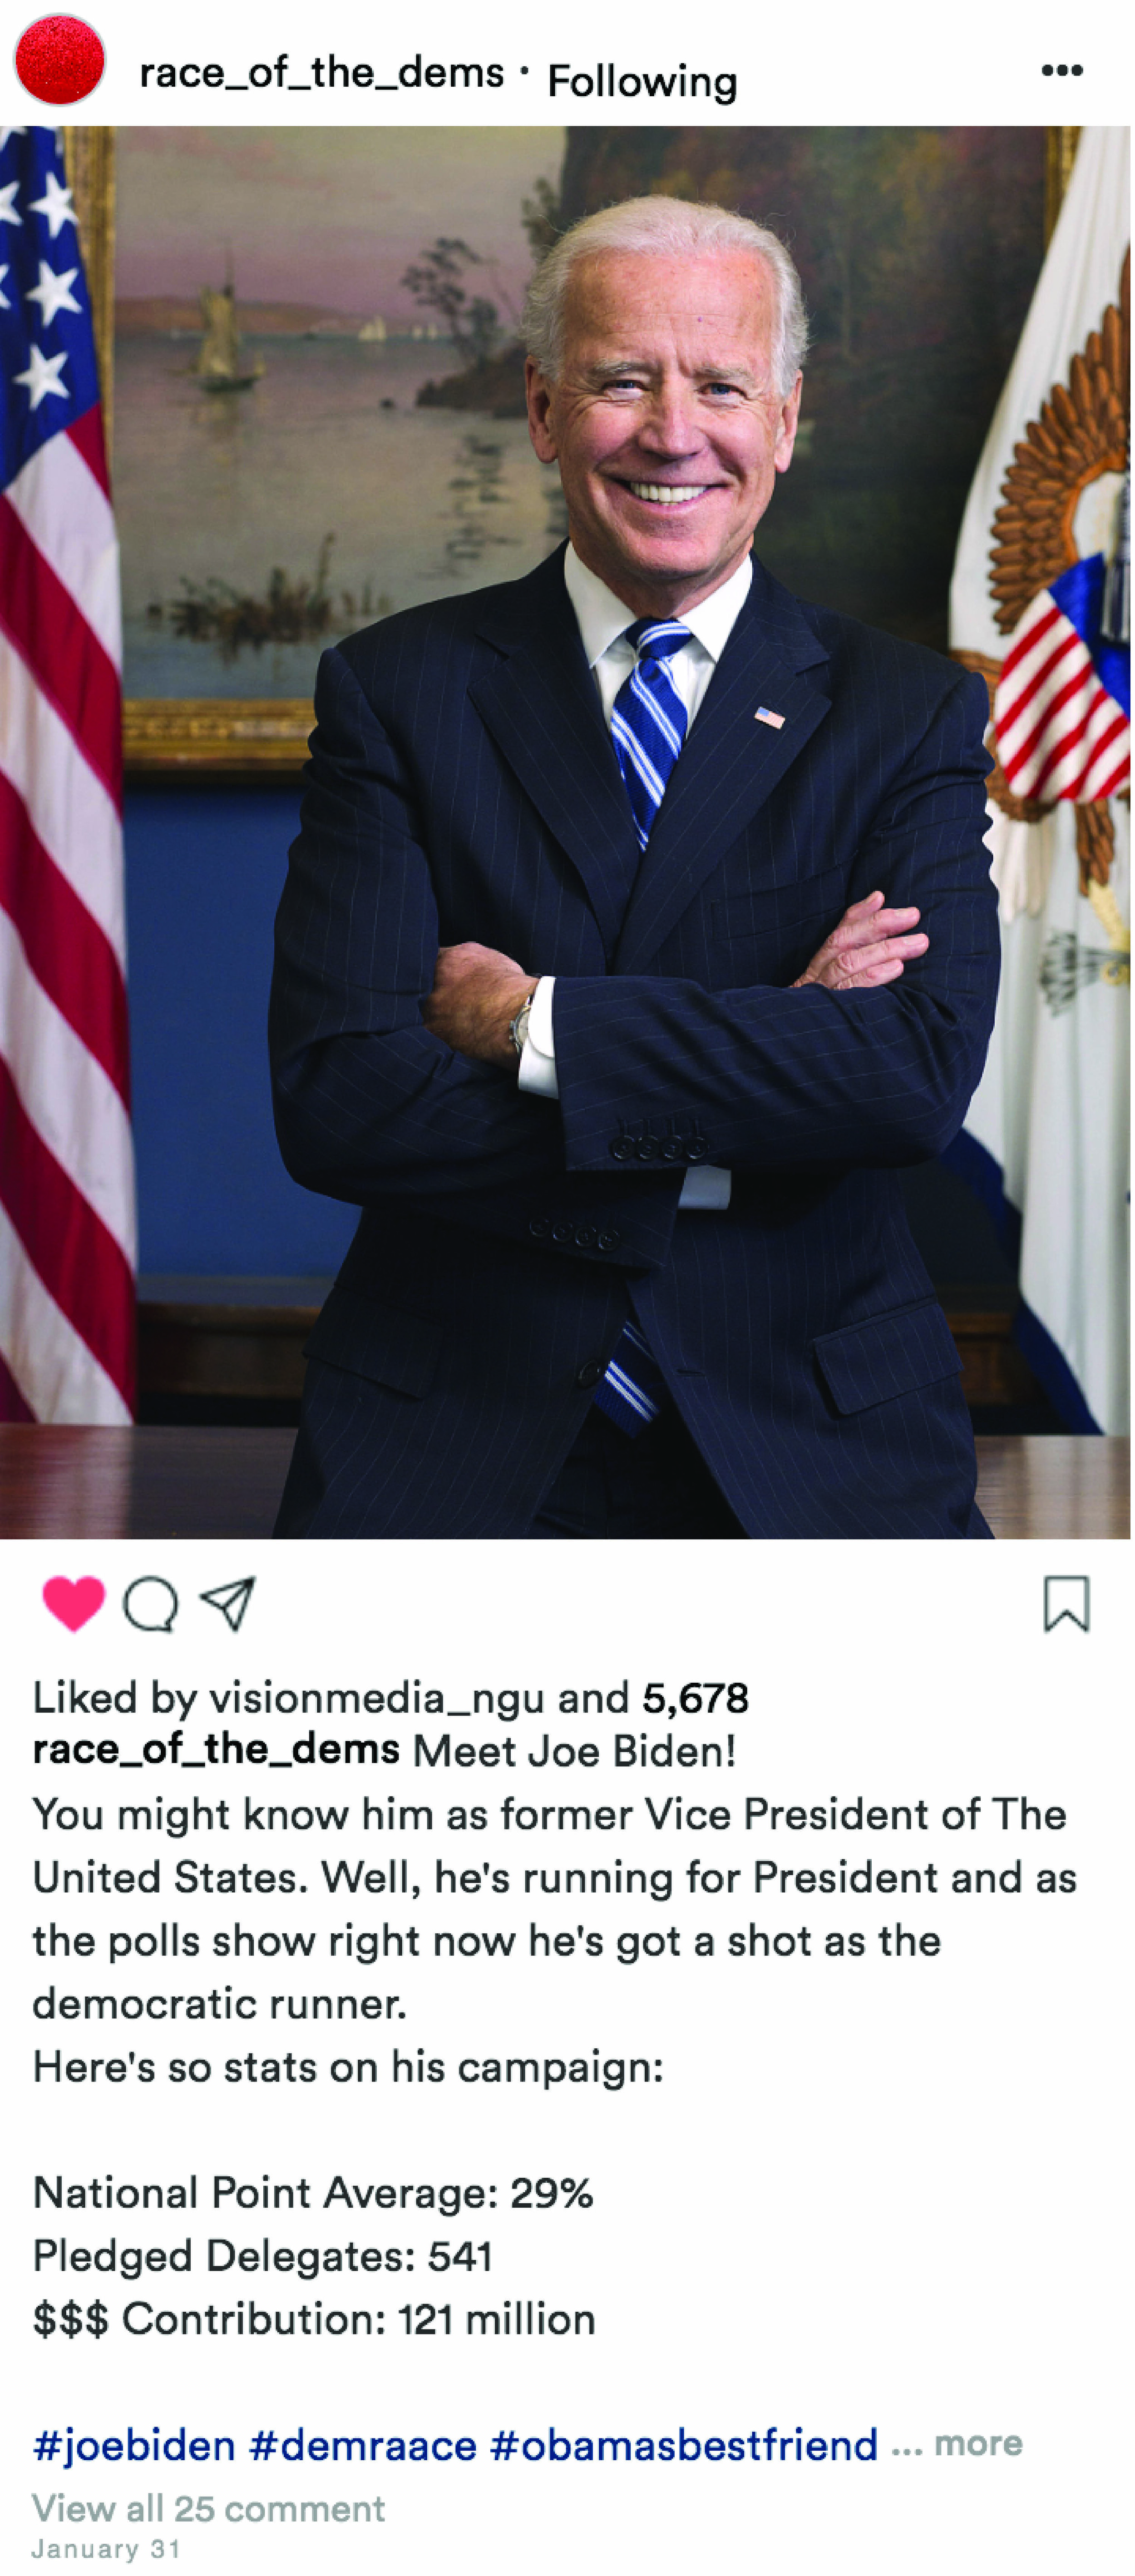 Mock Instagram post about Joe Biden.Photo courtesy of The White House